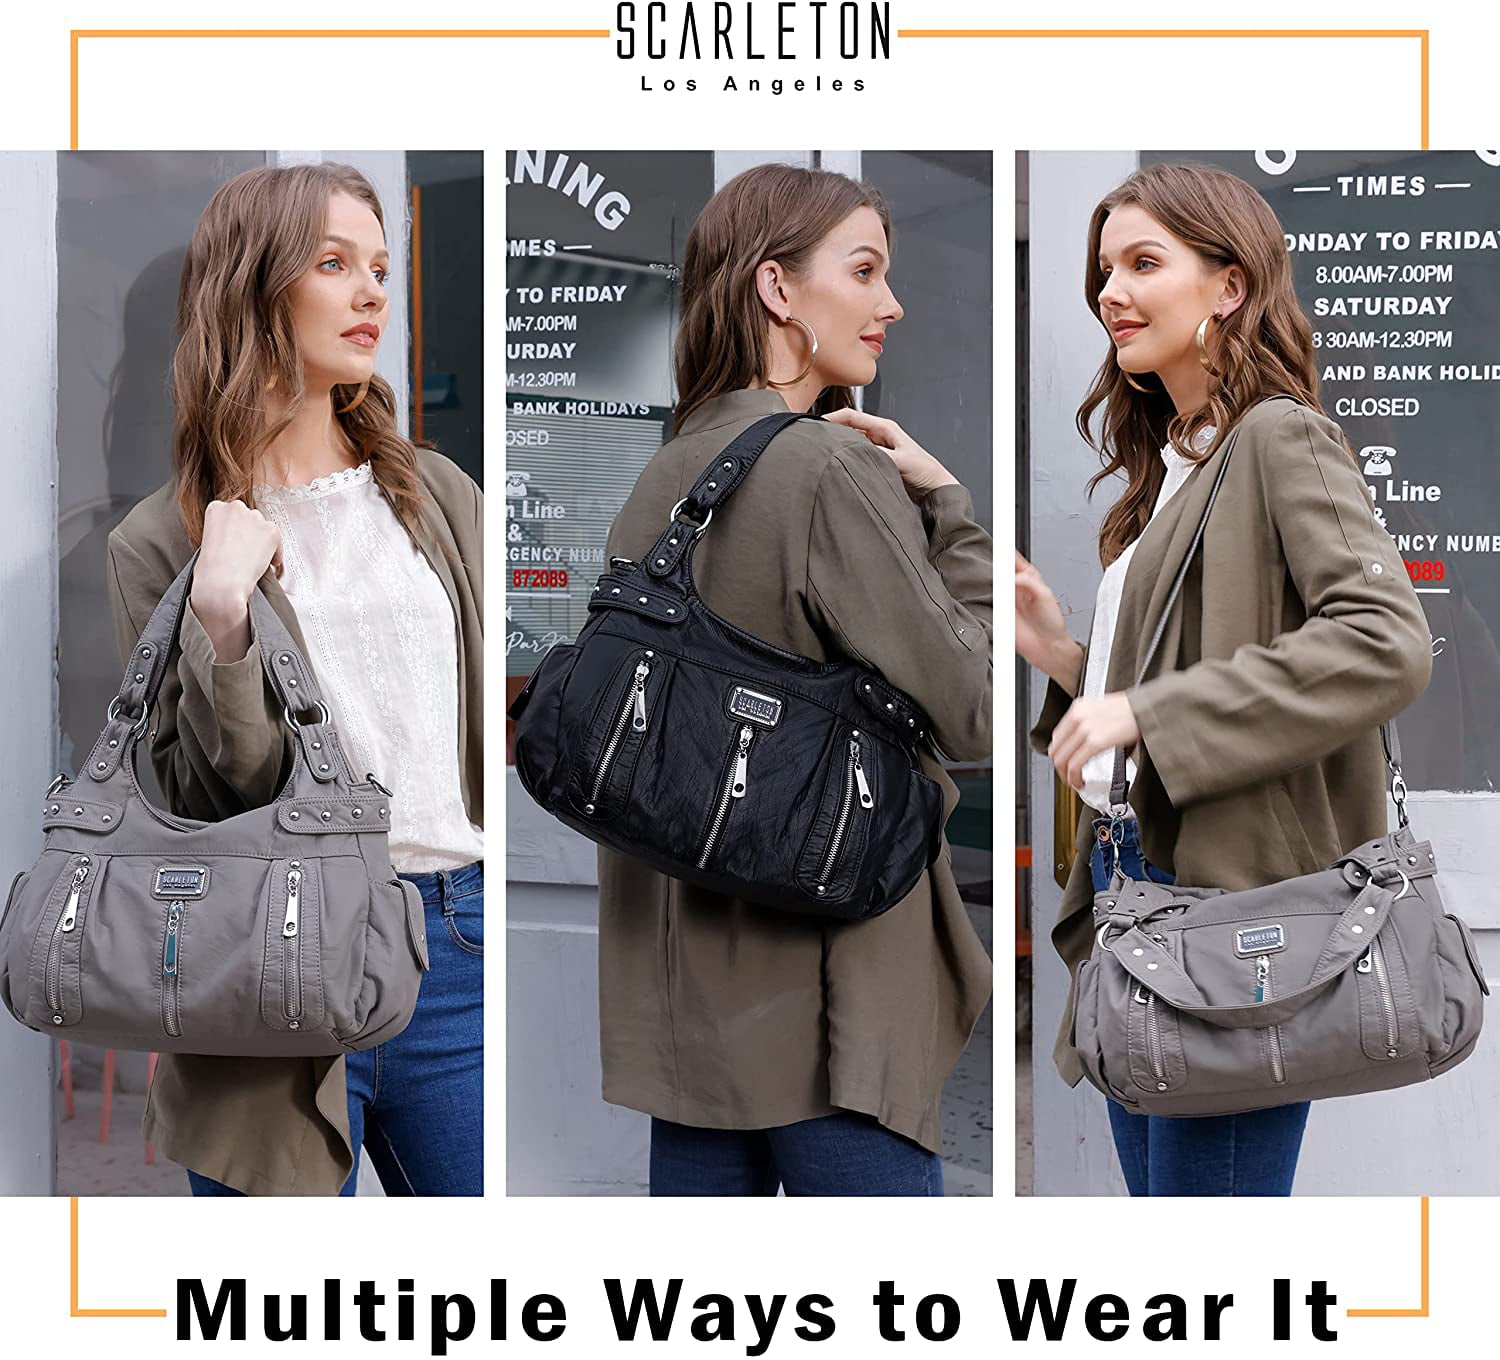 SCARLETON Purses for Women Large Hobo Bags Shoulder Bag Satchel Tote Top Handle Handbags H1292 